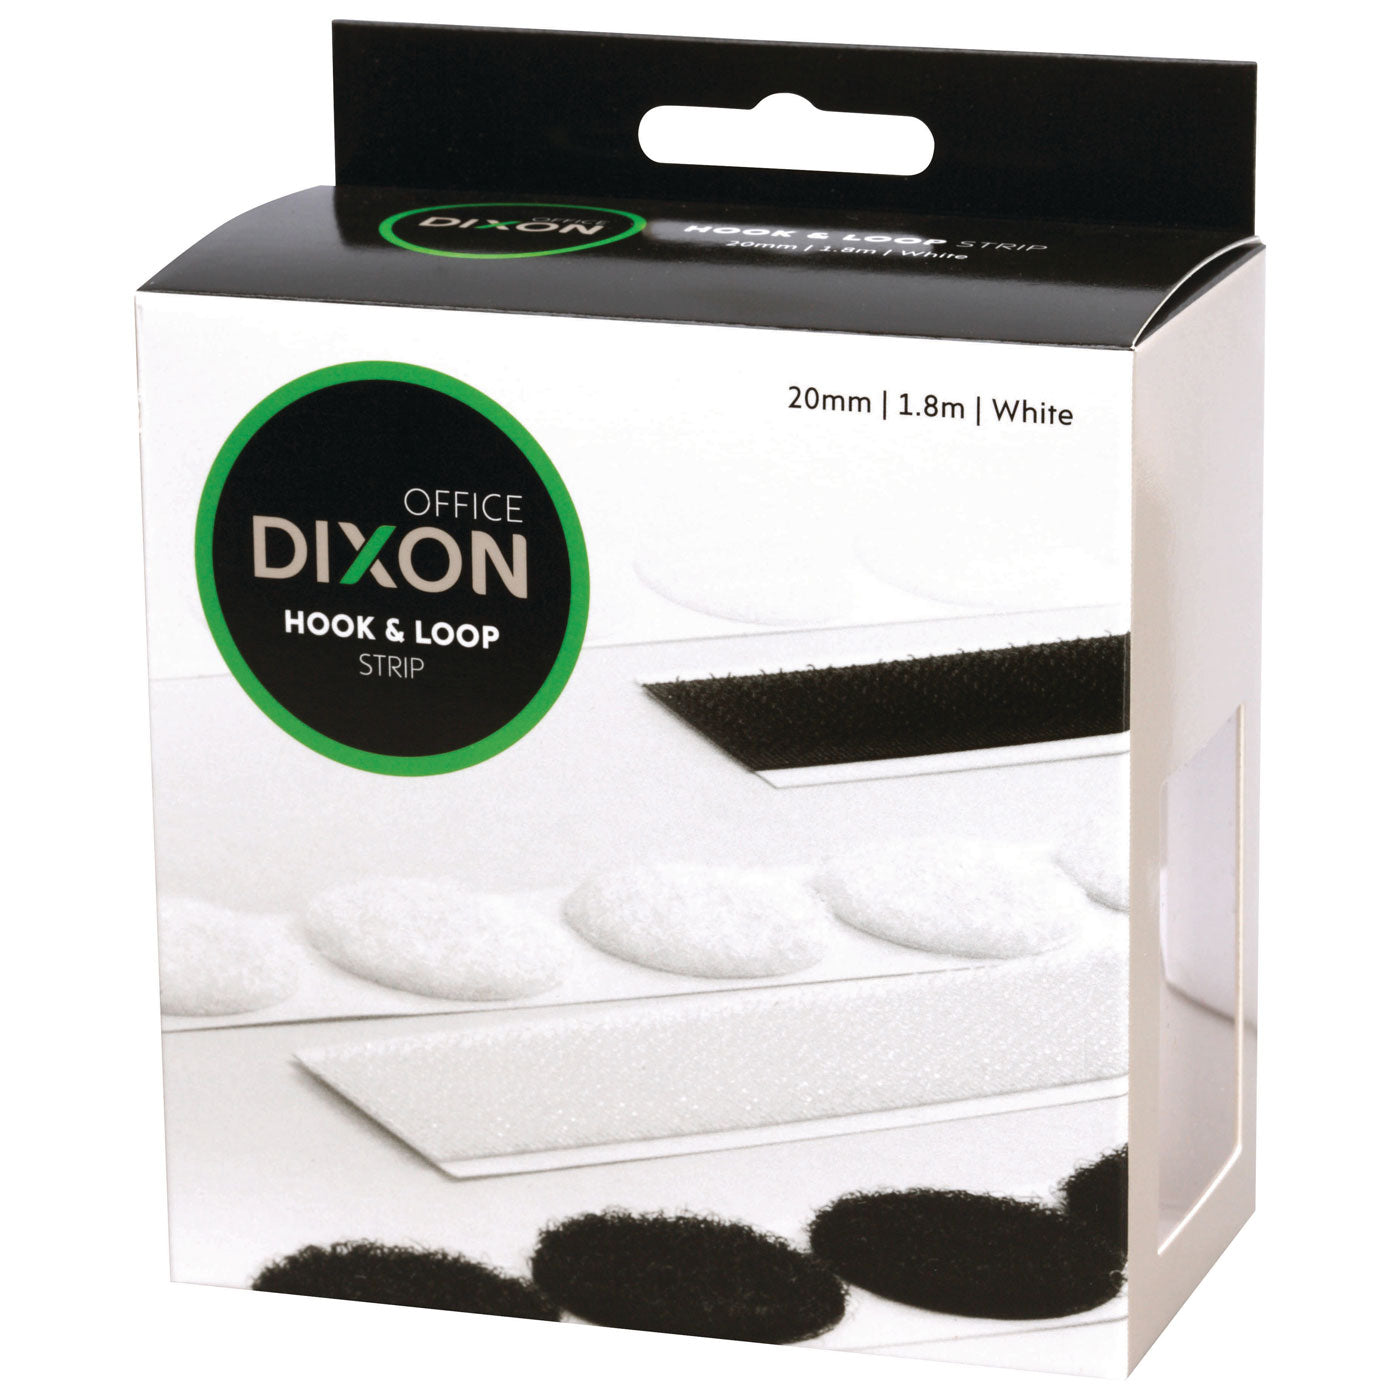 Dixon self-adhesive Hook & Loop Fastener Strip 1.8 M White